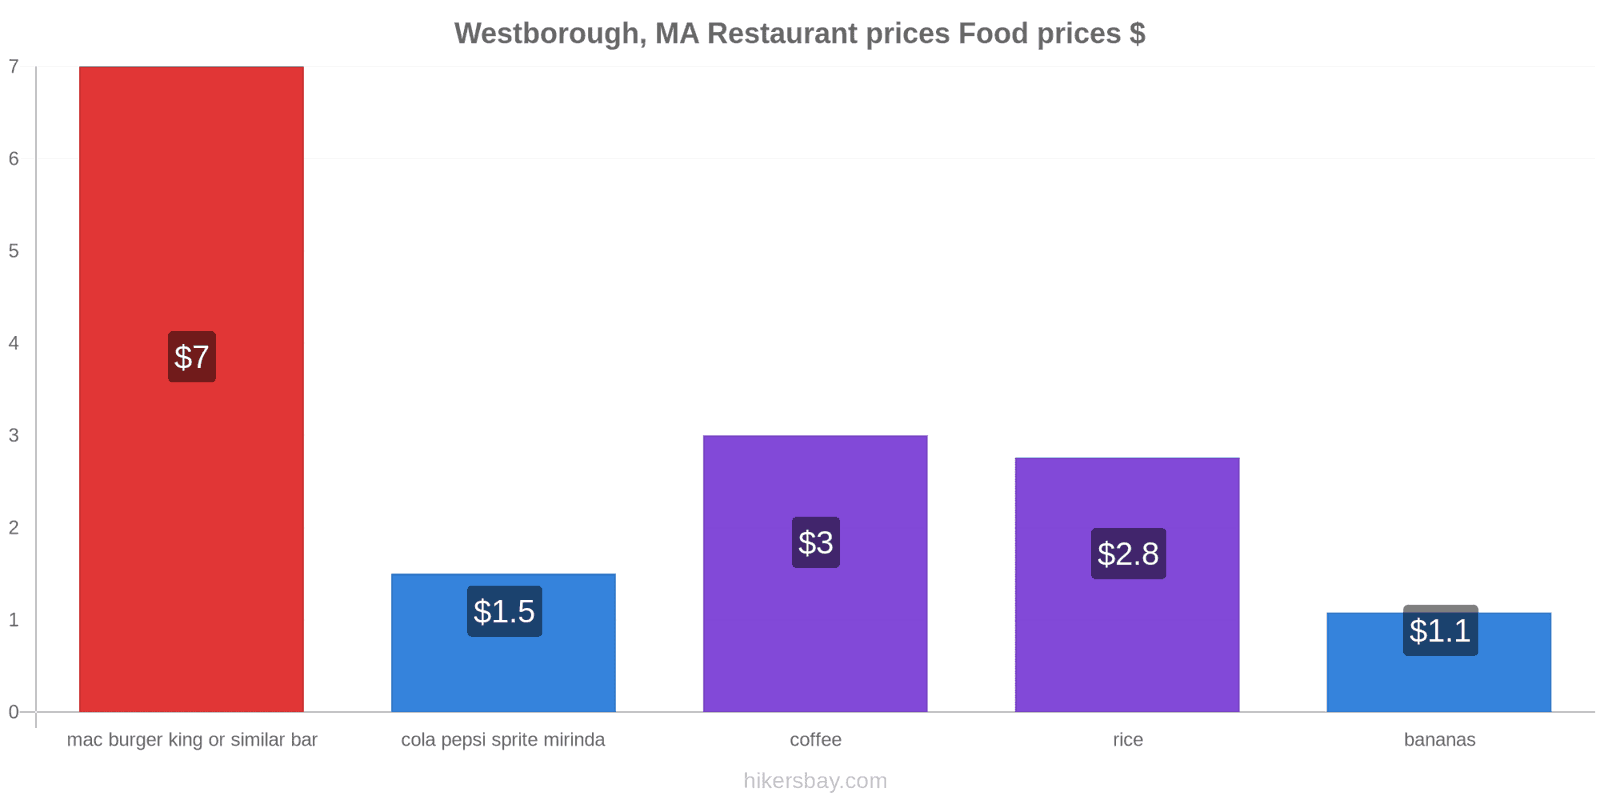 Westborough, MA price changes hikersbay.com